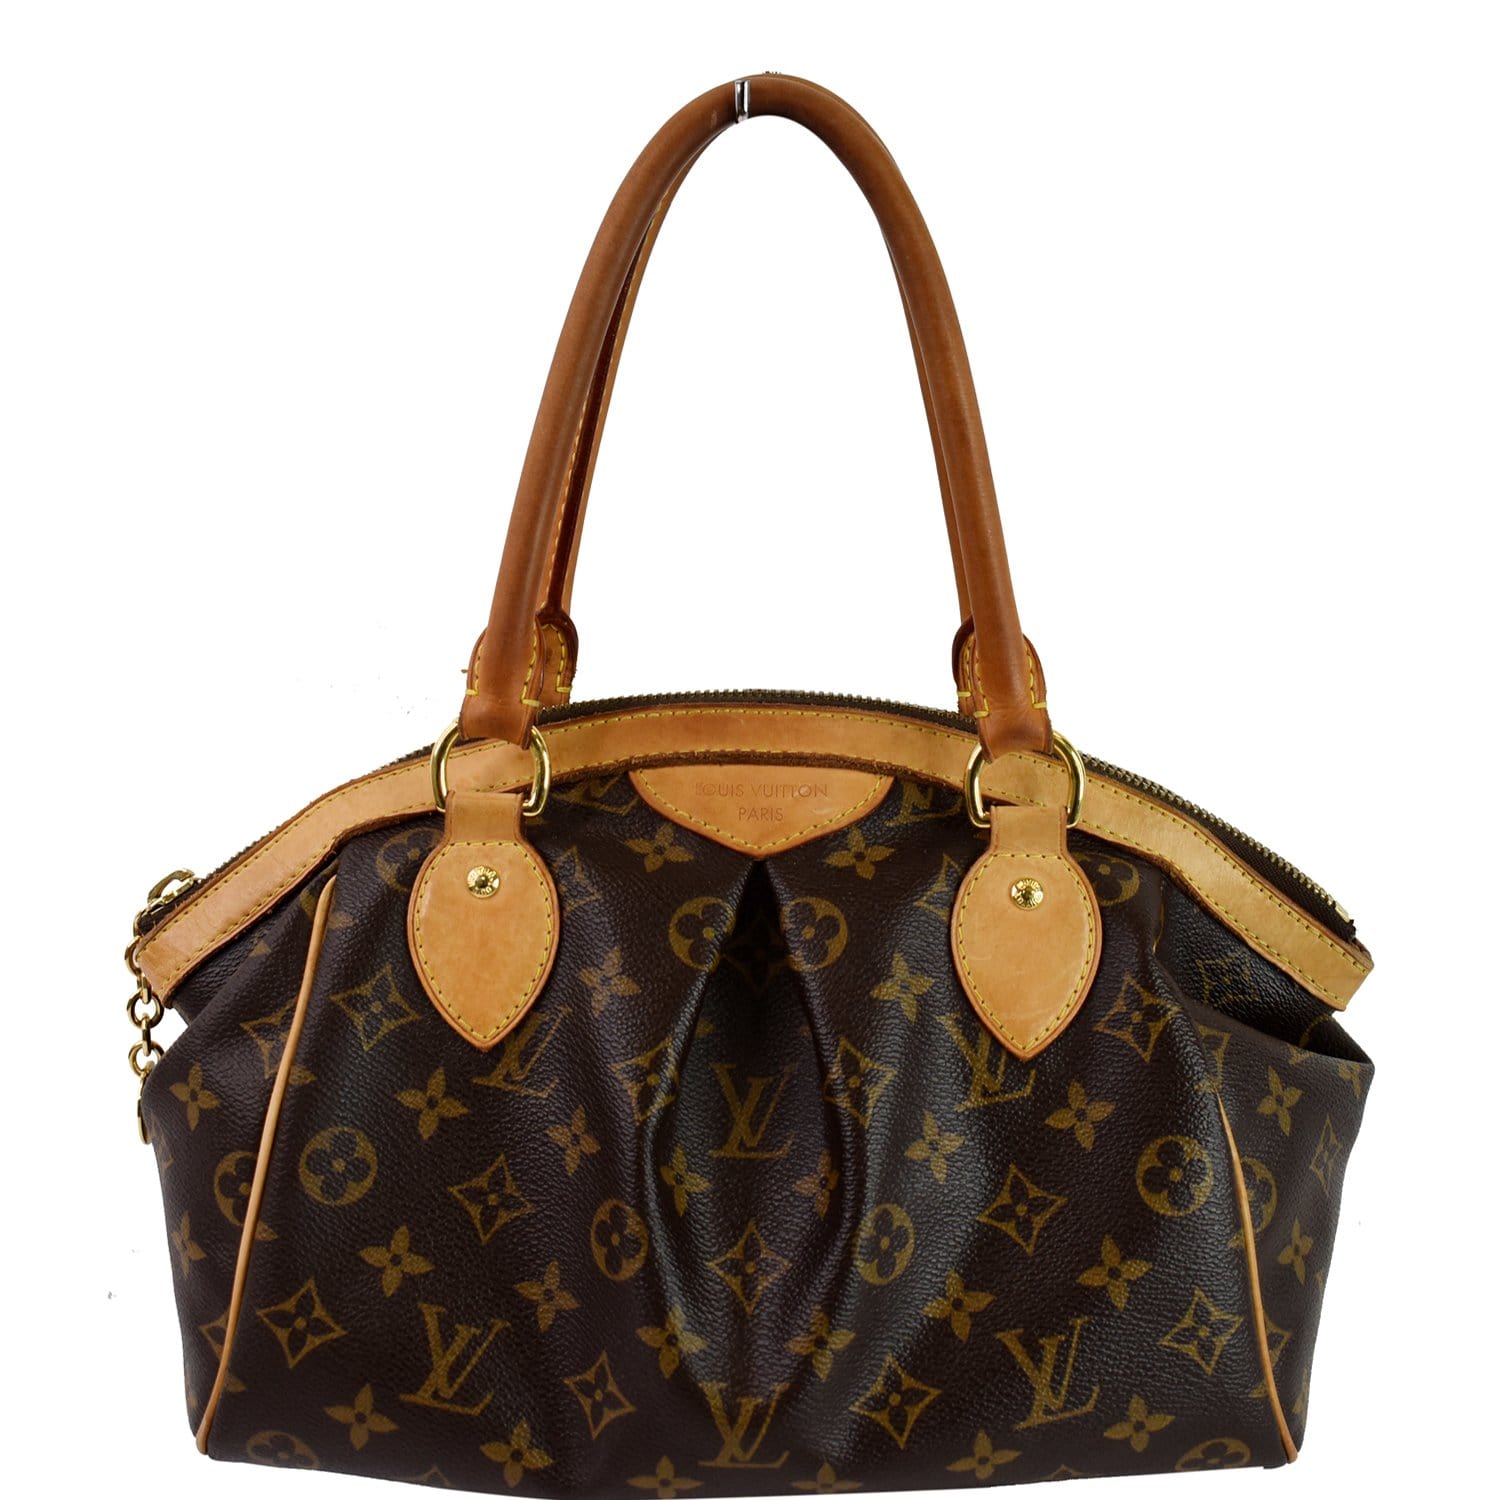 Authentic Louis Vuitton Tivoli Pm Handbag